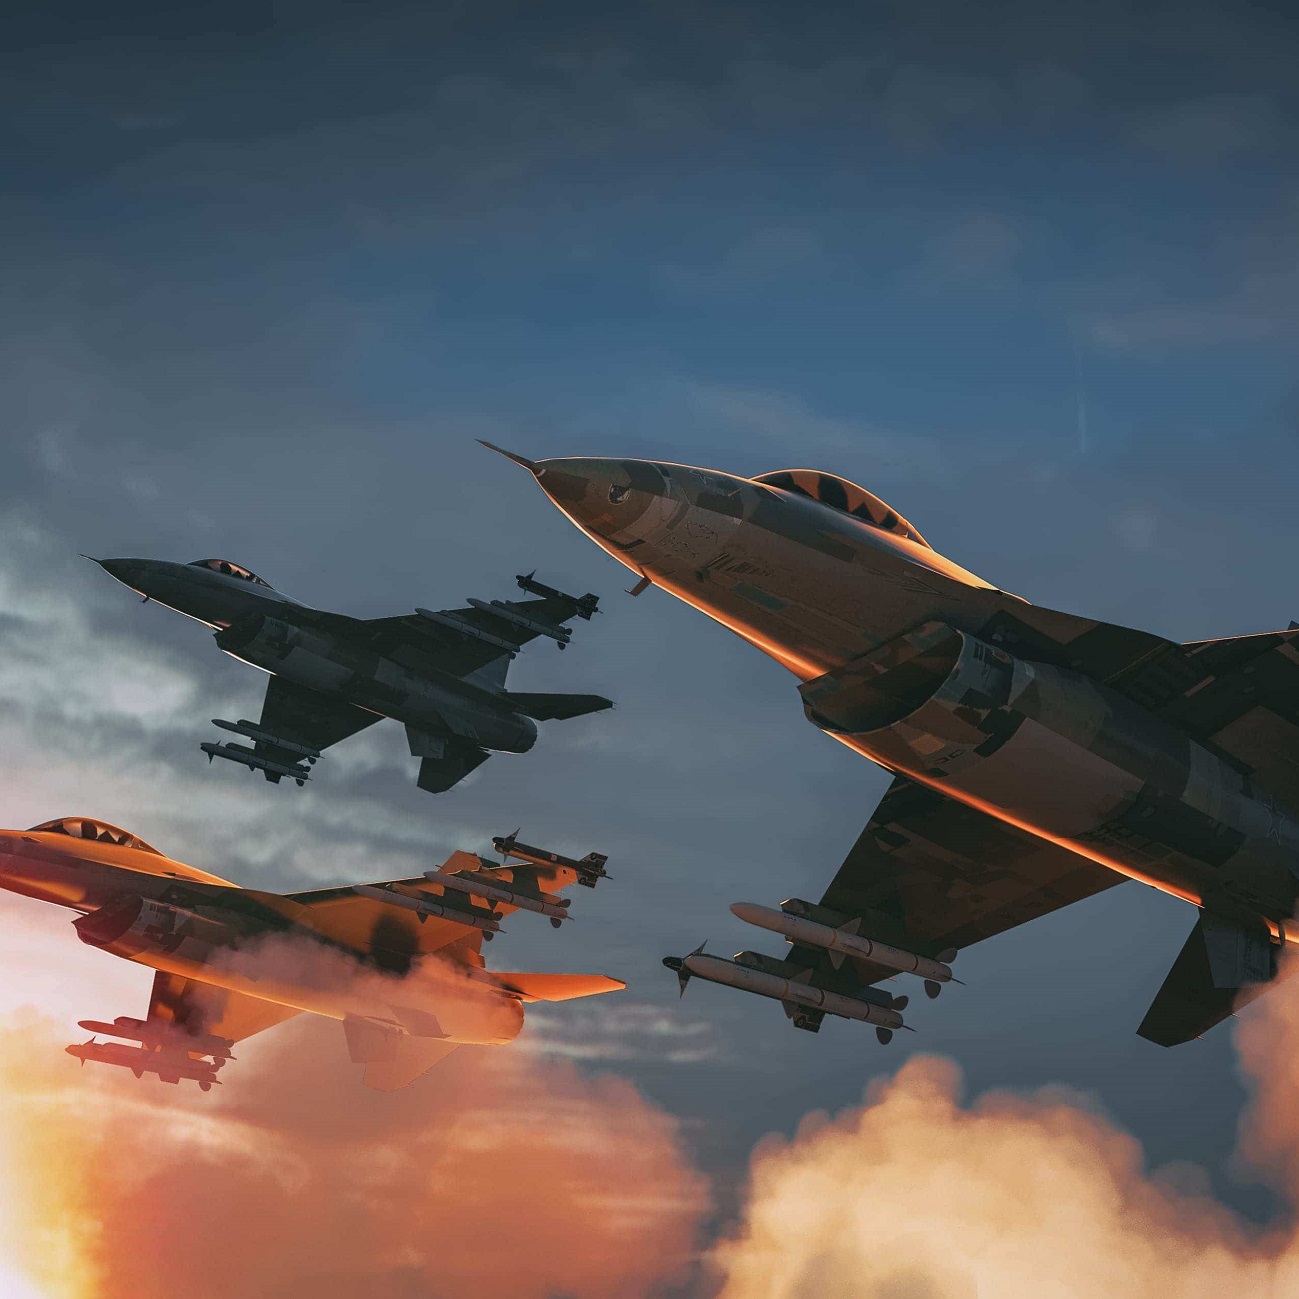 Three military jets in flight